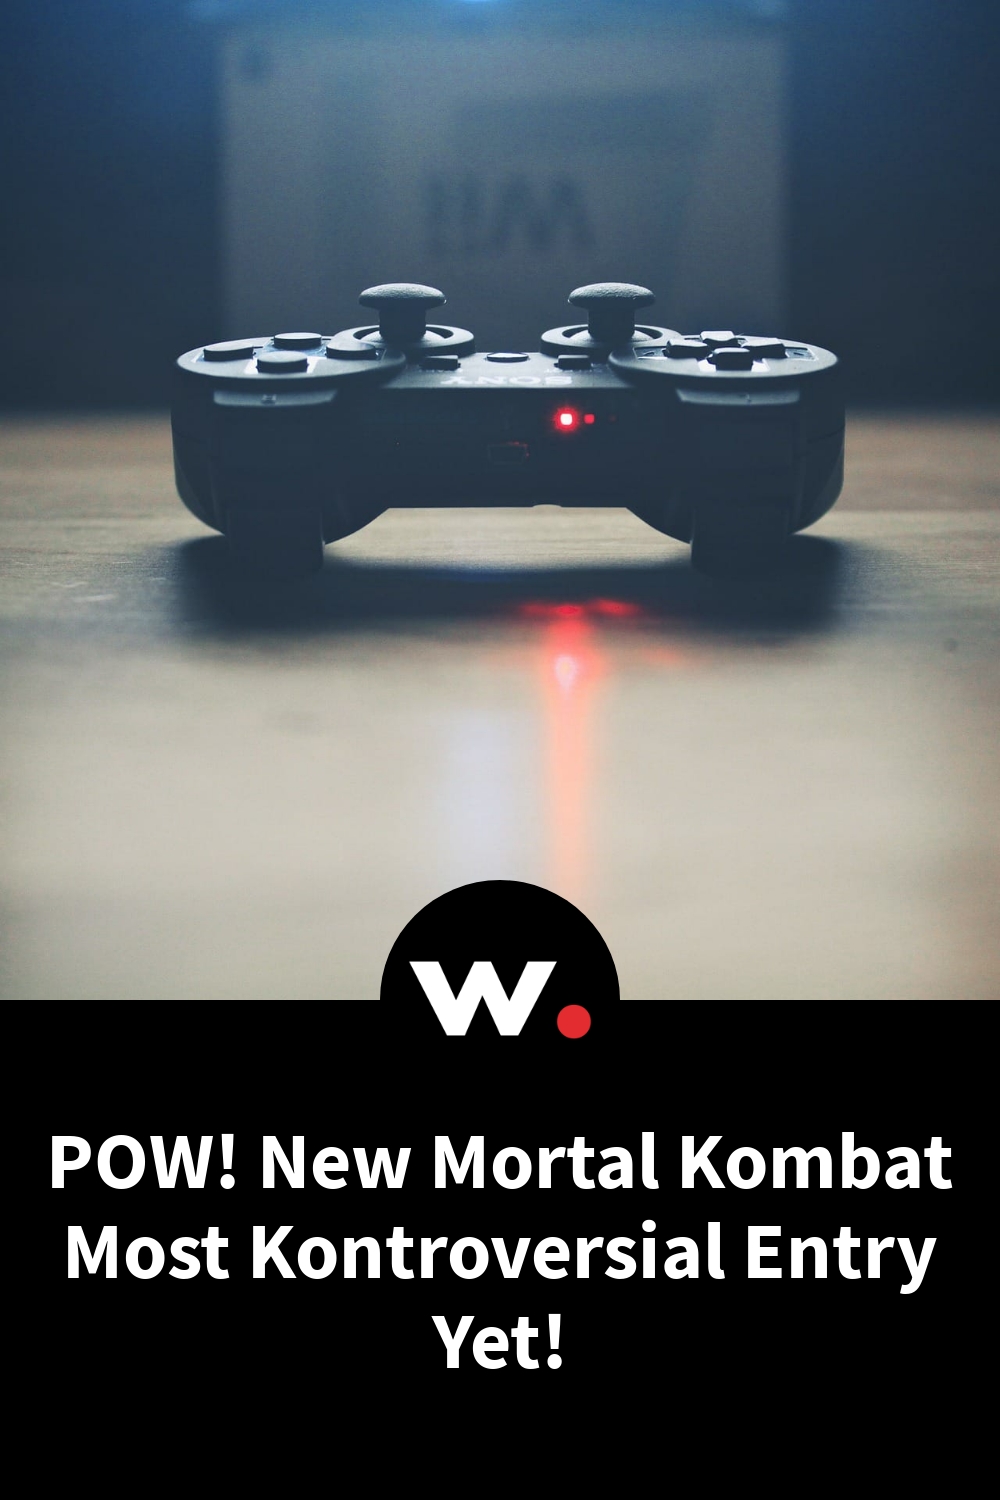 POW! New Mortal Kombat Most Kontroversial Entry Yet!